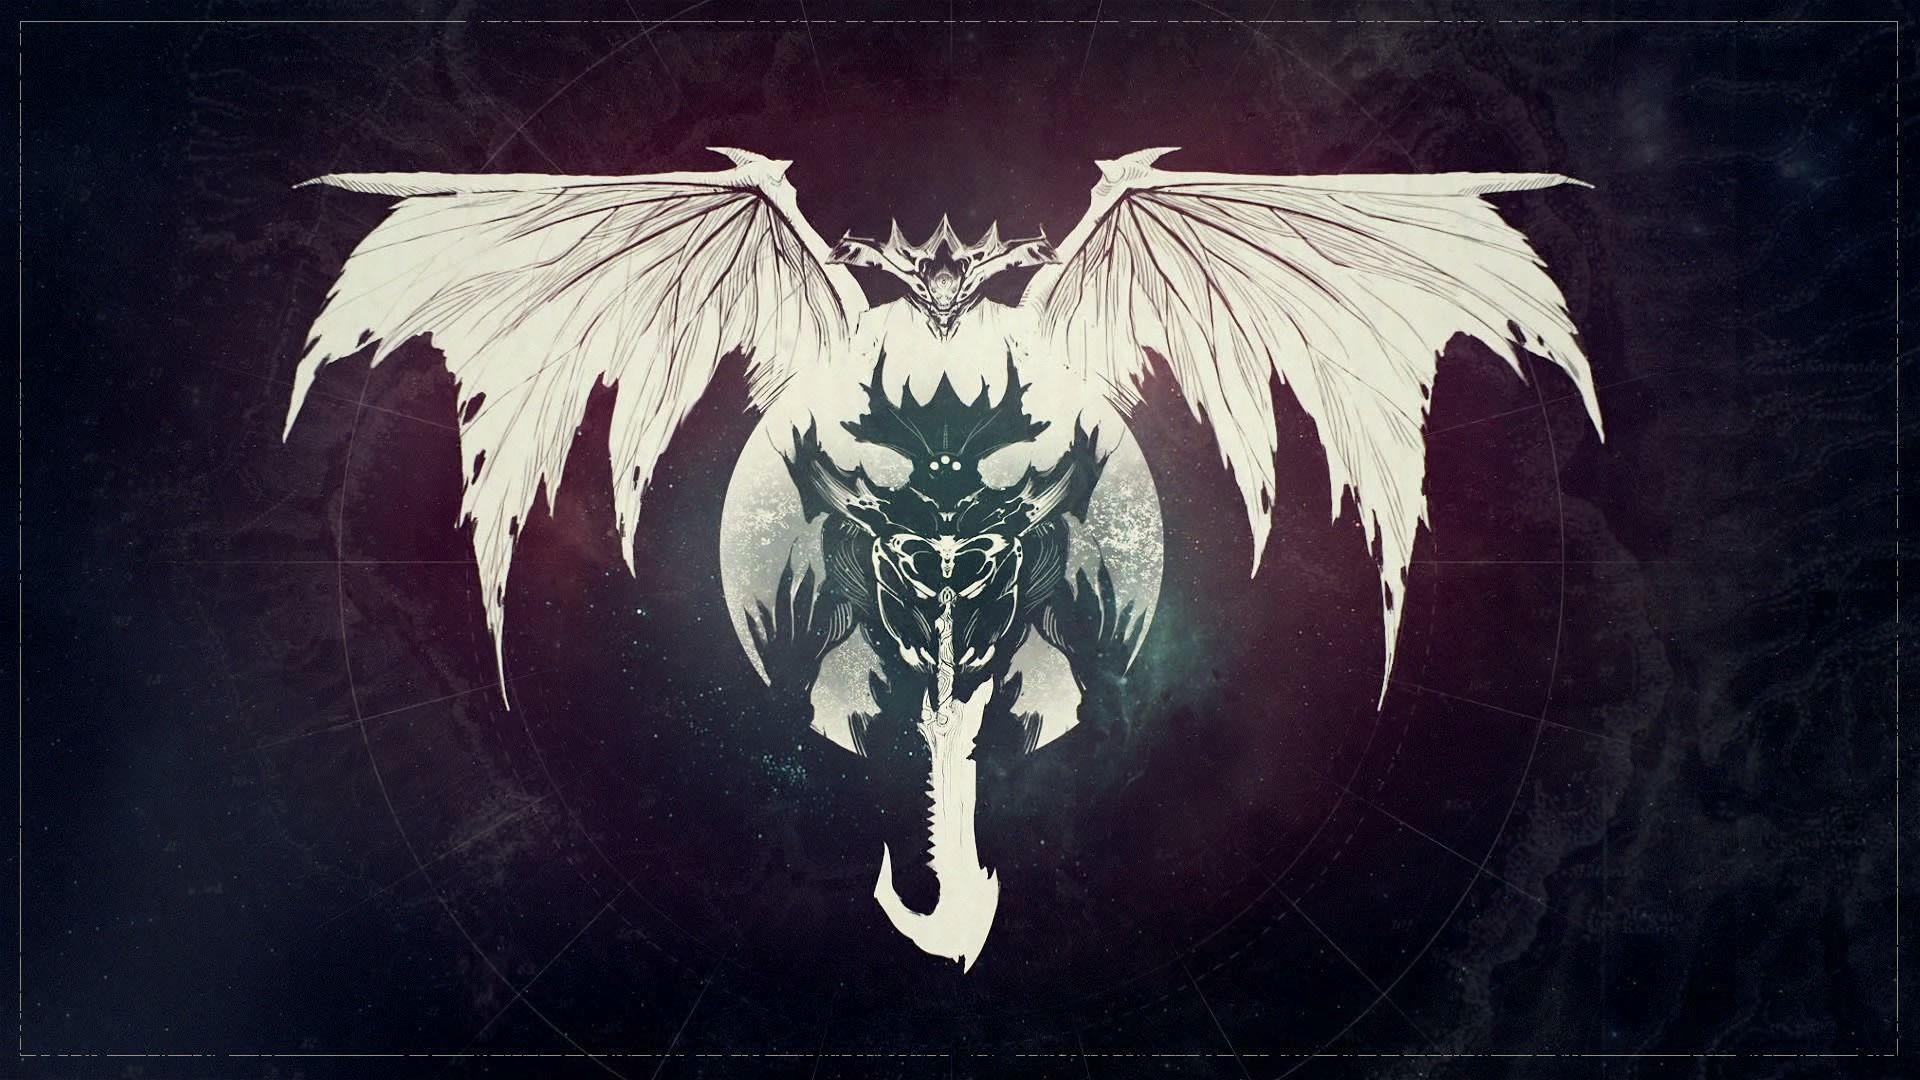 Destiny Oryx, the Taken King